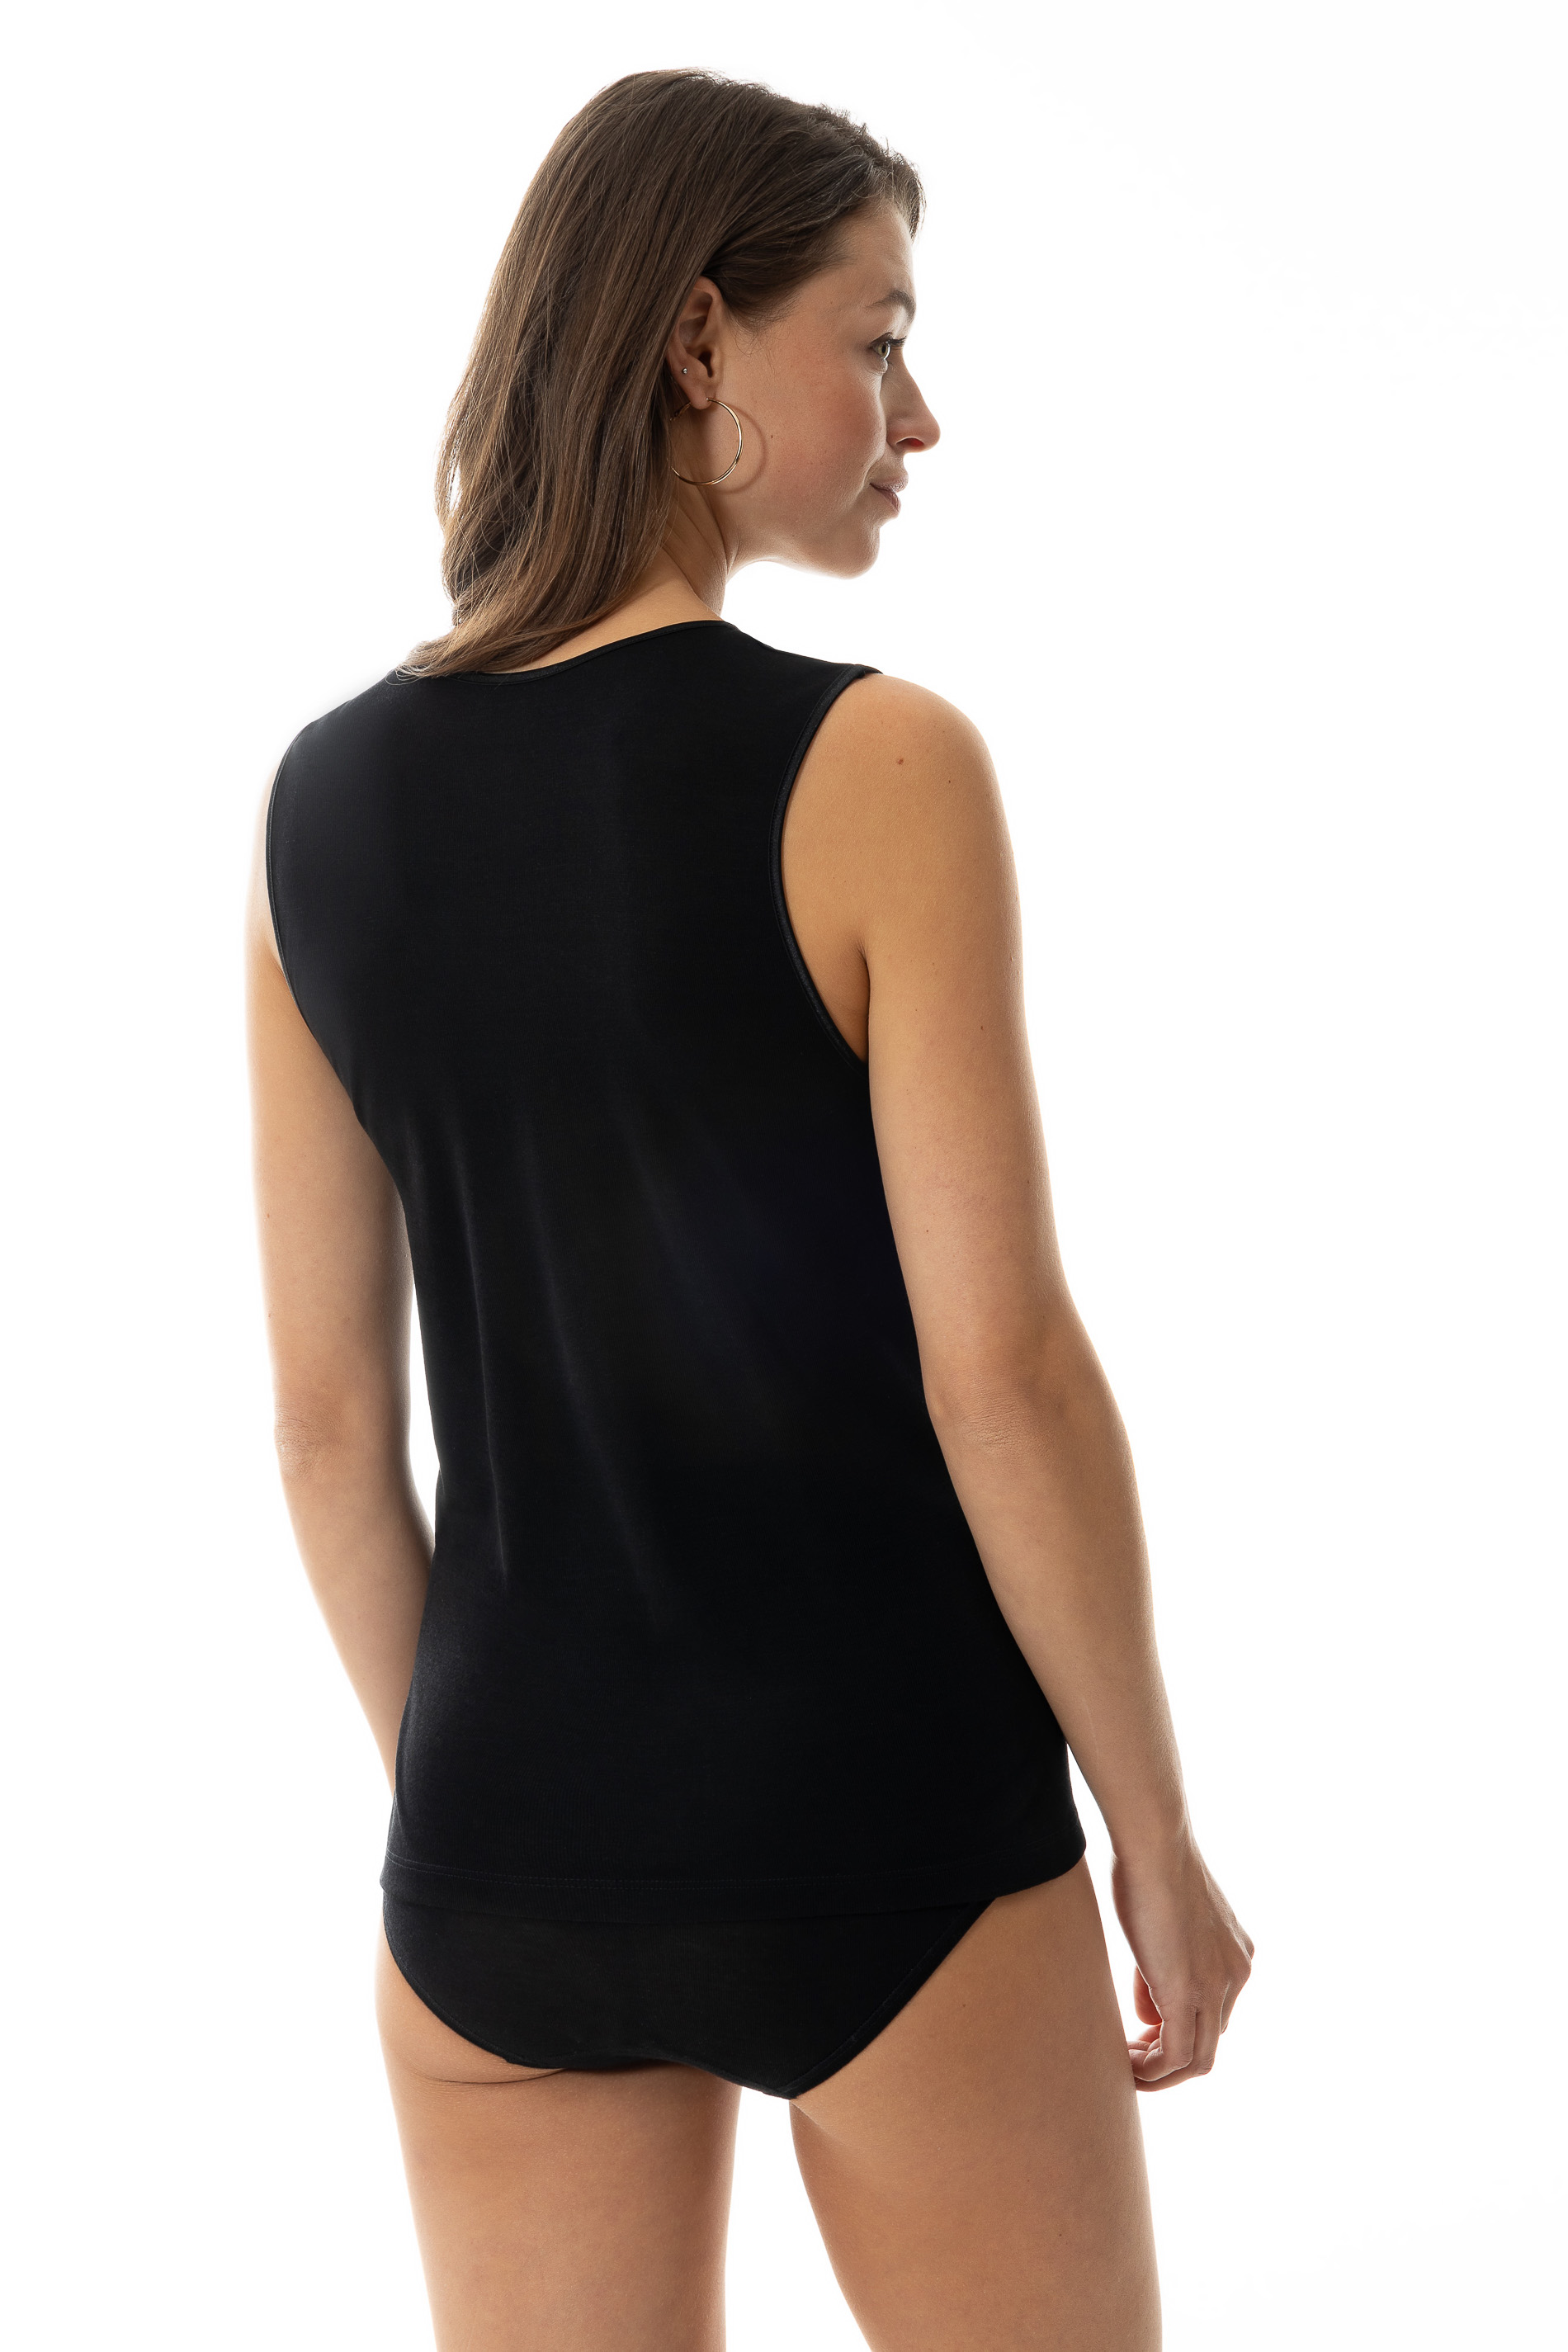 Sleeveless vest Black Serie Exquisite Rear View | mey®